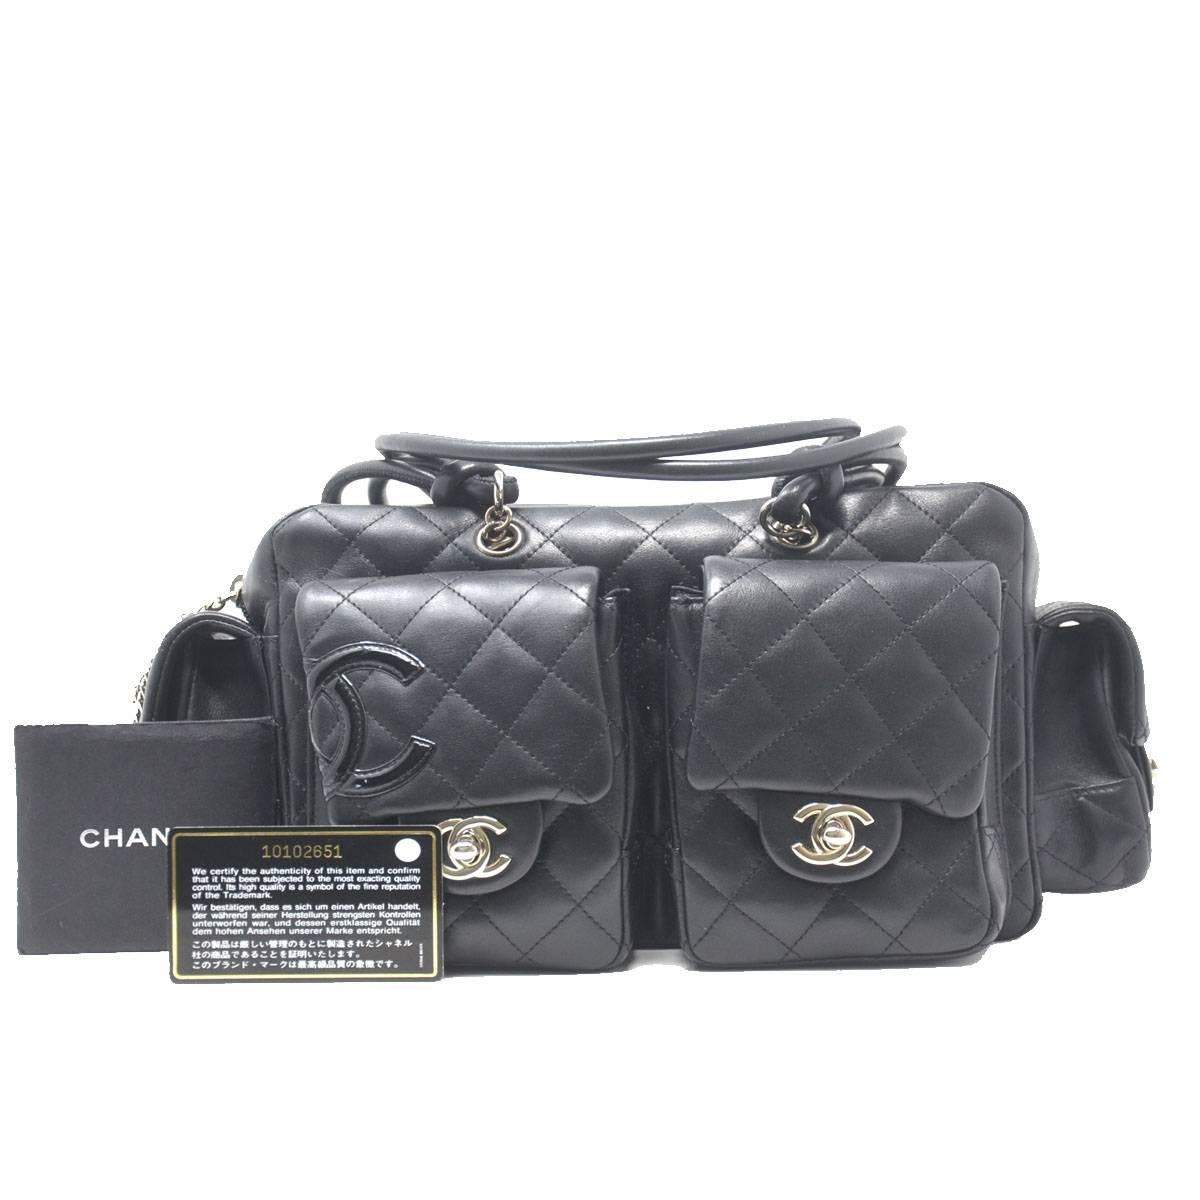 Company-Chanel
Model-Cambon Reporter Shoulder Bag
Color-Black
Date Code-10102651
Material-Leather
Measurements-9.75